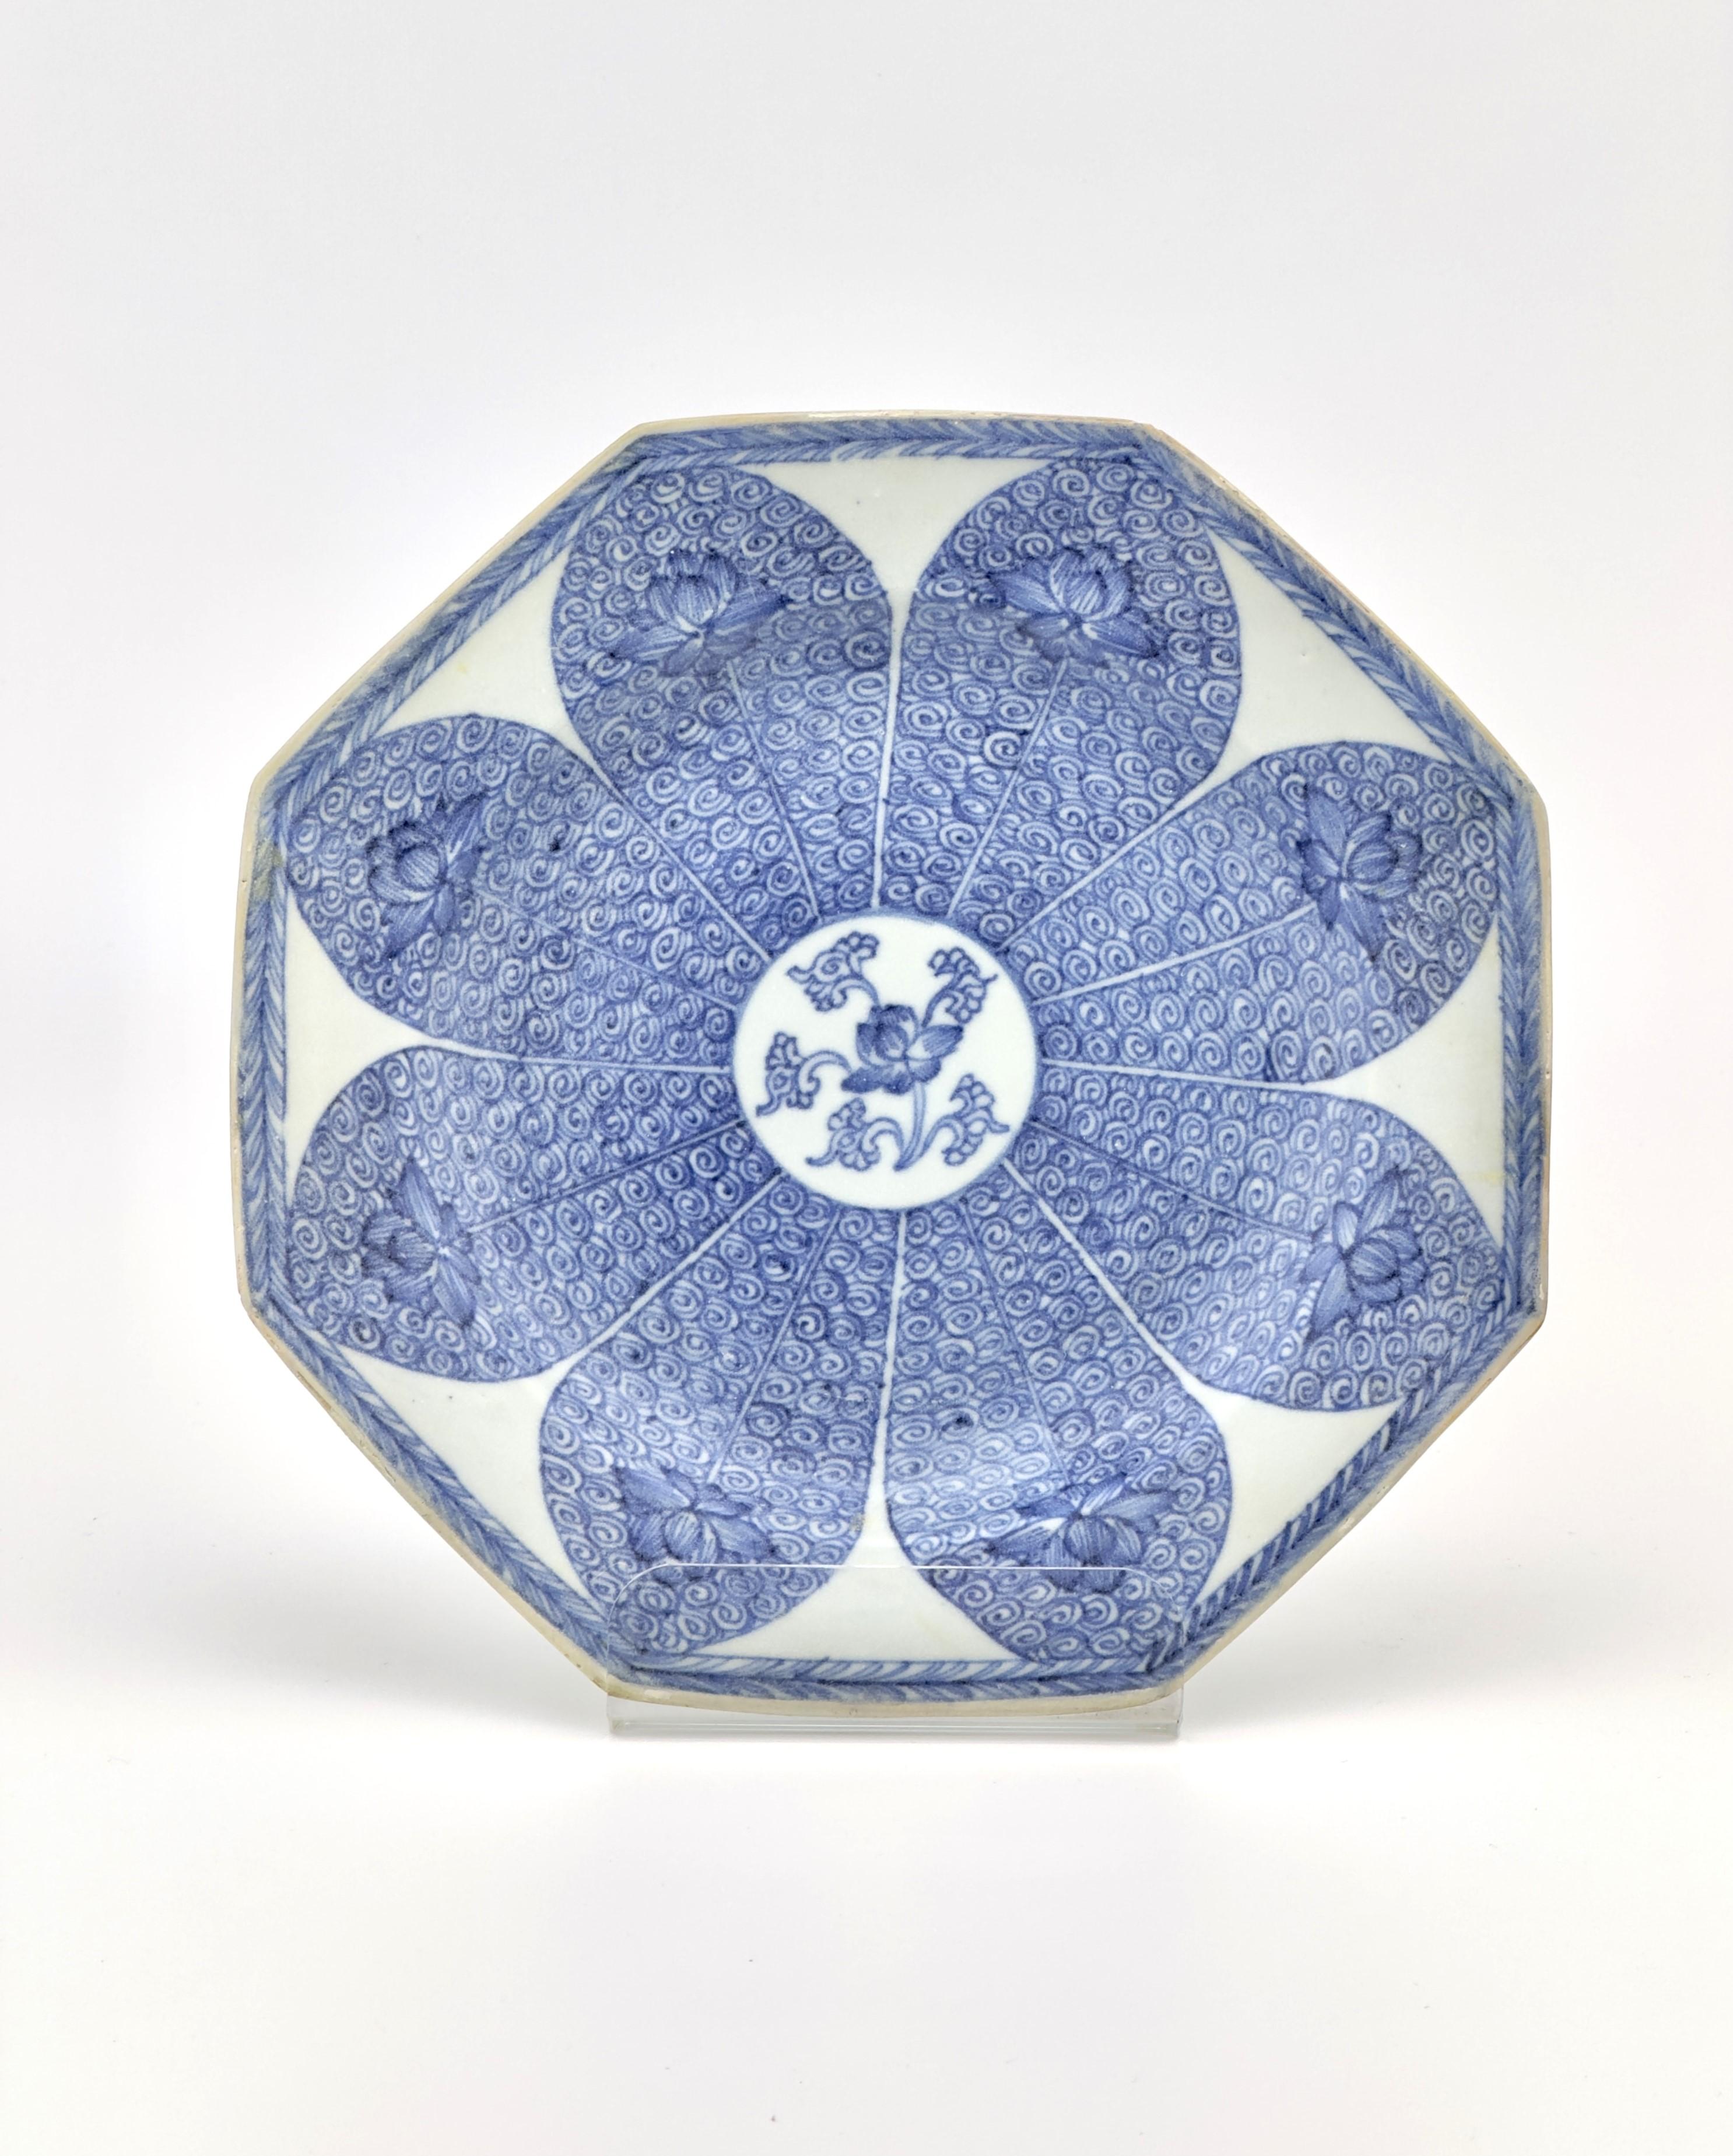 Ceramic 'Lotus' Pattern Blue and White Dish c. 1725, Qing Dynasty, Yongzheng Era For Sale